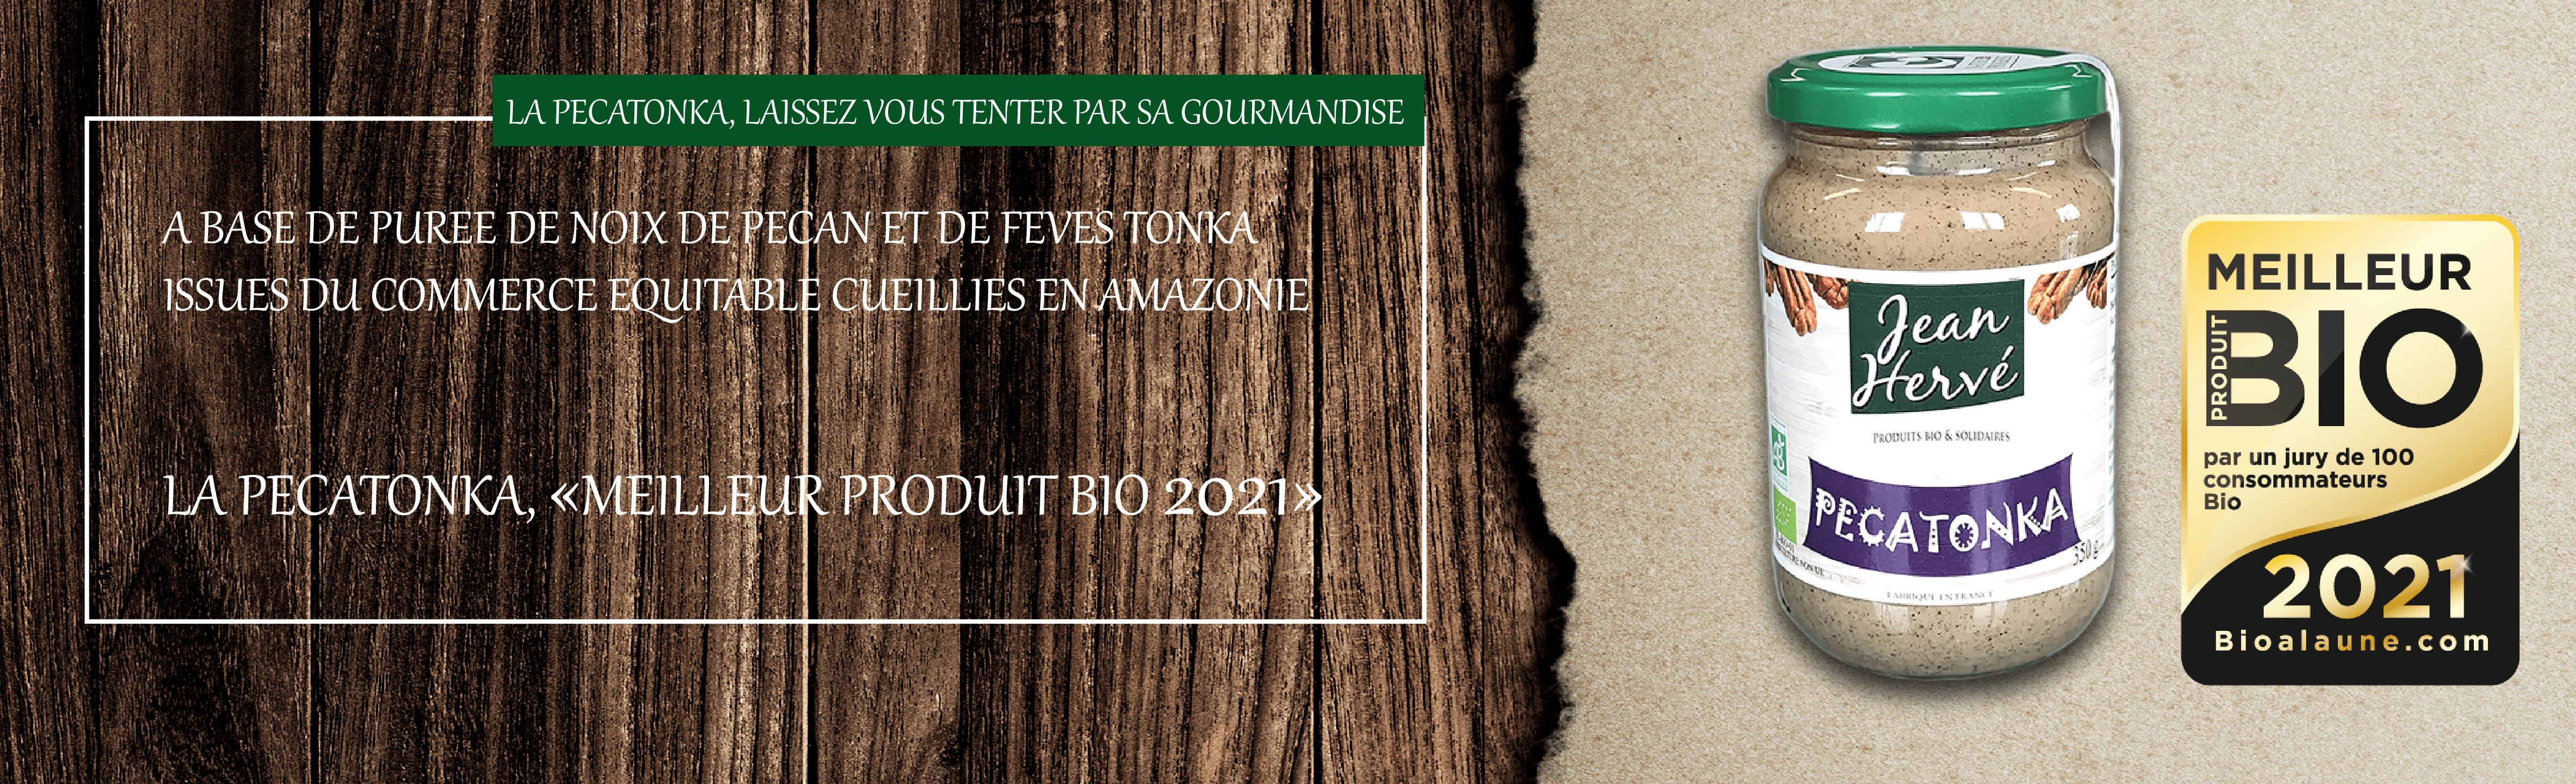 La Pecatonka remporte prix meilleur produit bio 2021